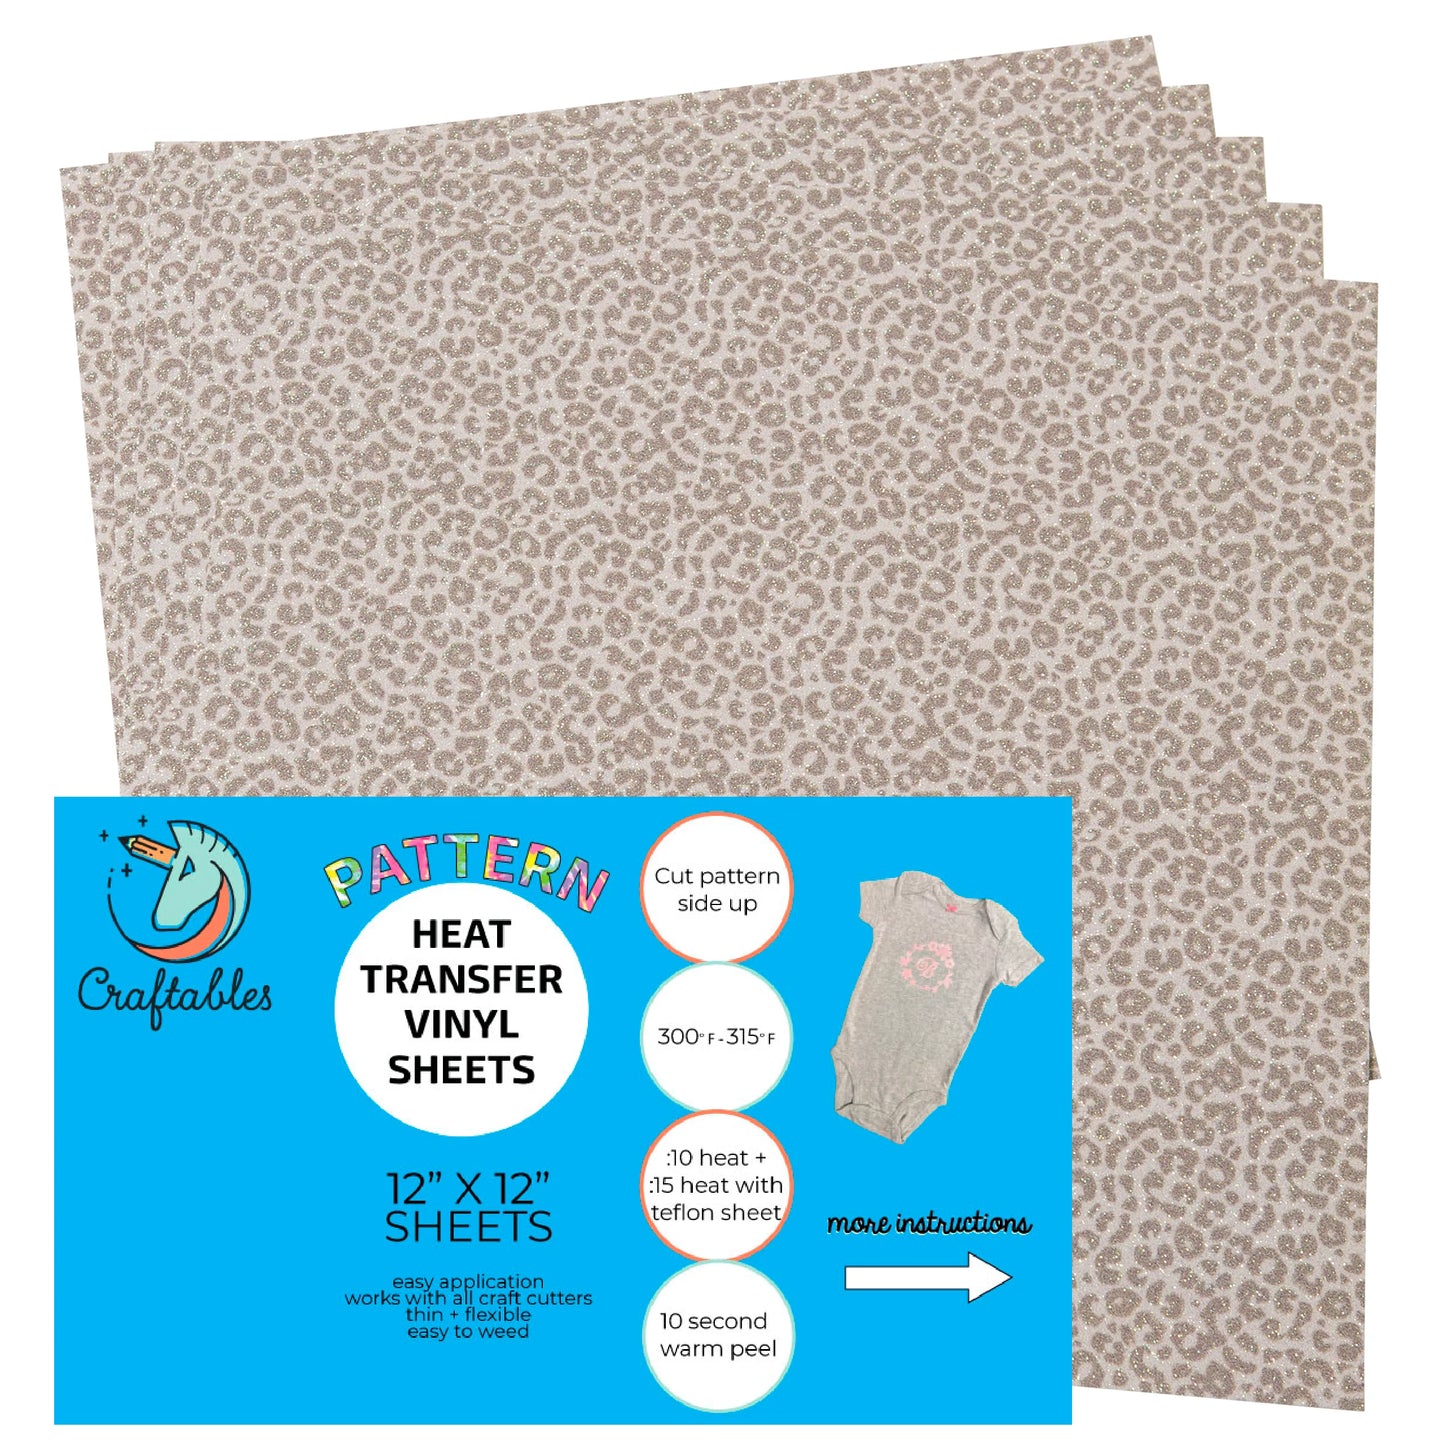 Leopard Printed Glitter Pattern Heat Transfer Vinyl Sheets By Craftables